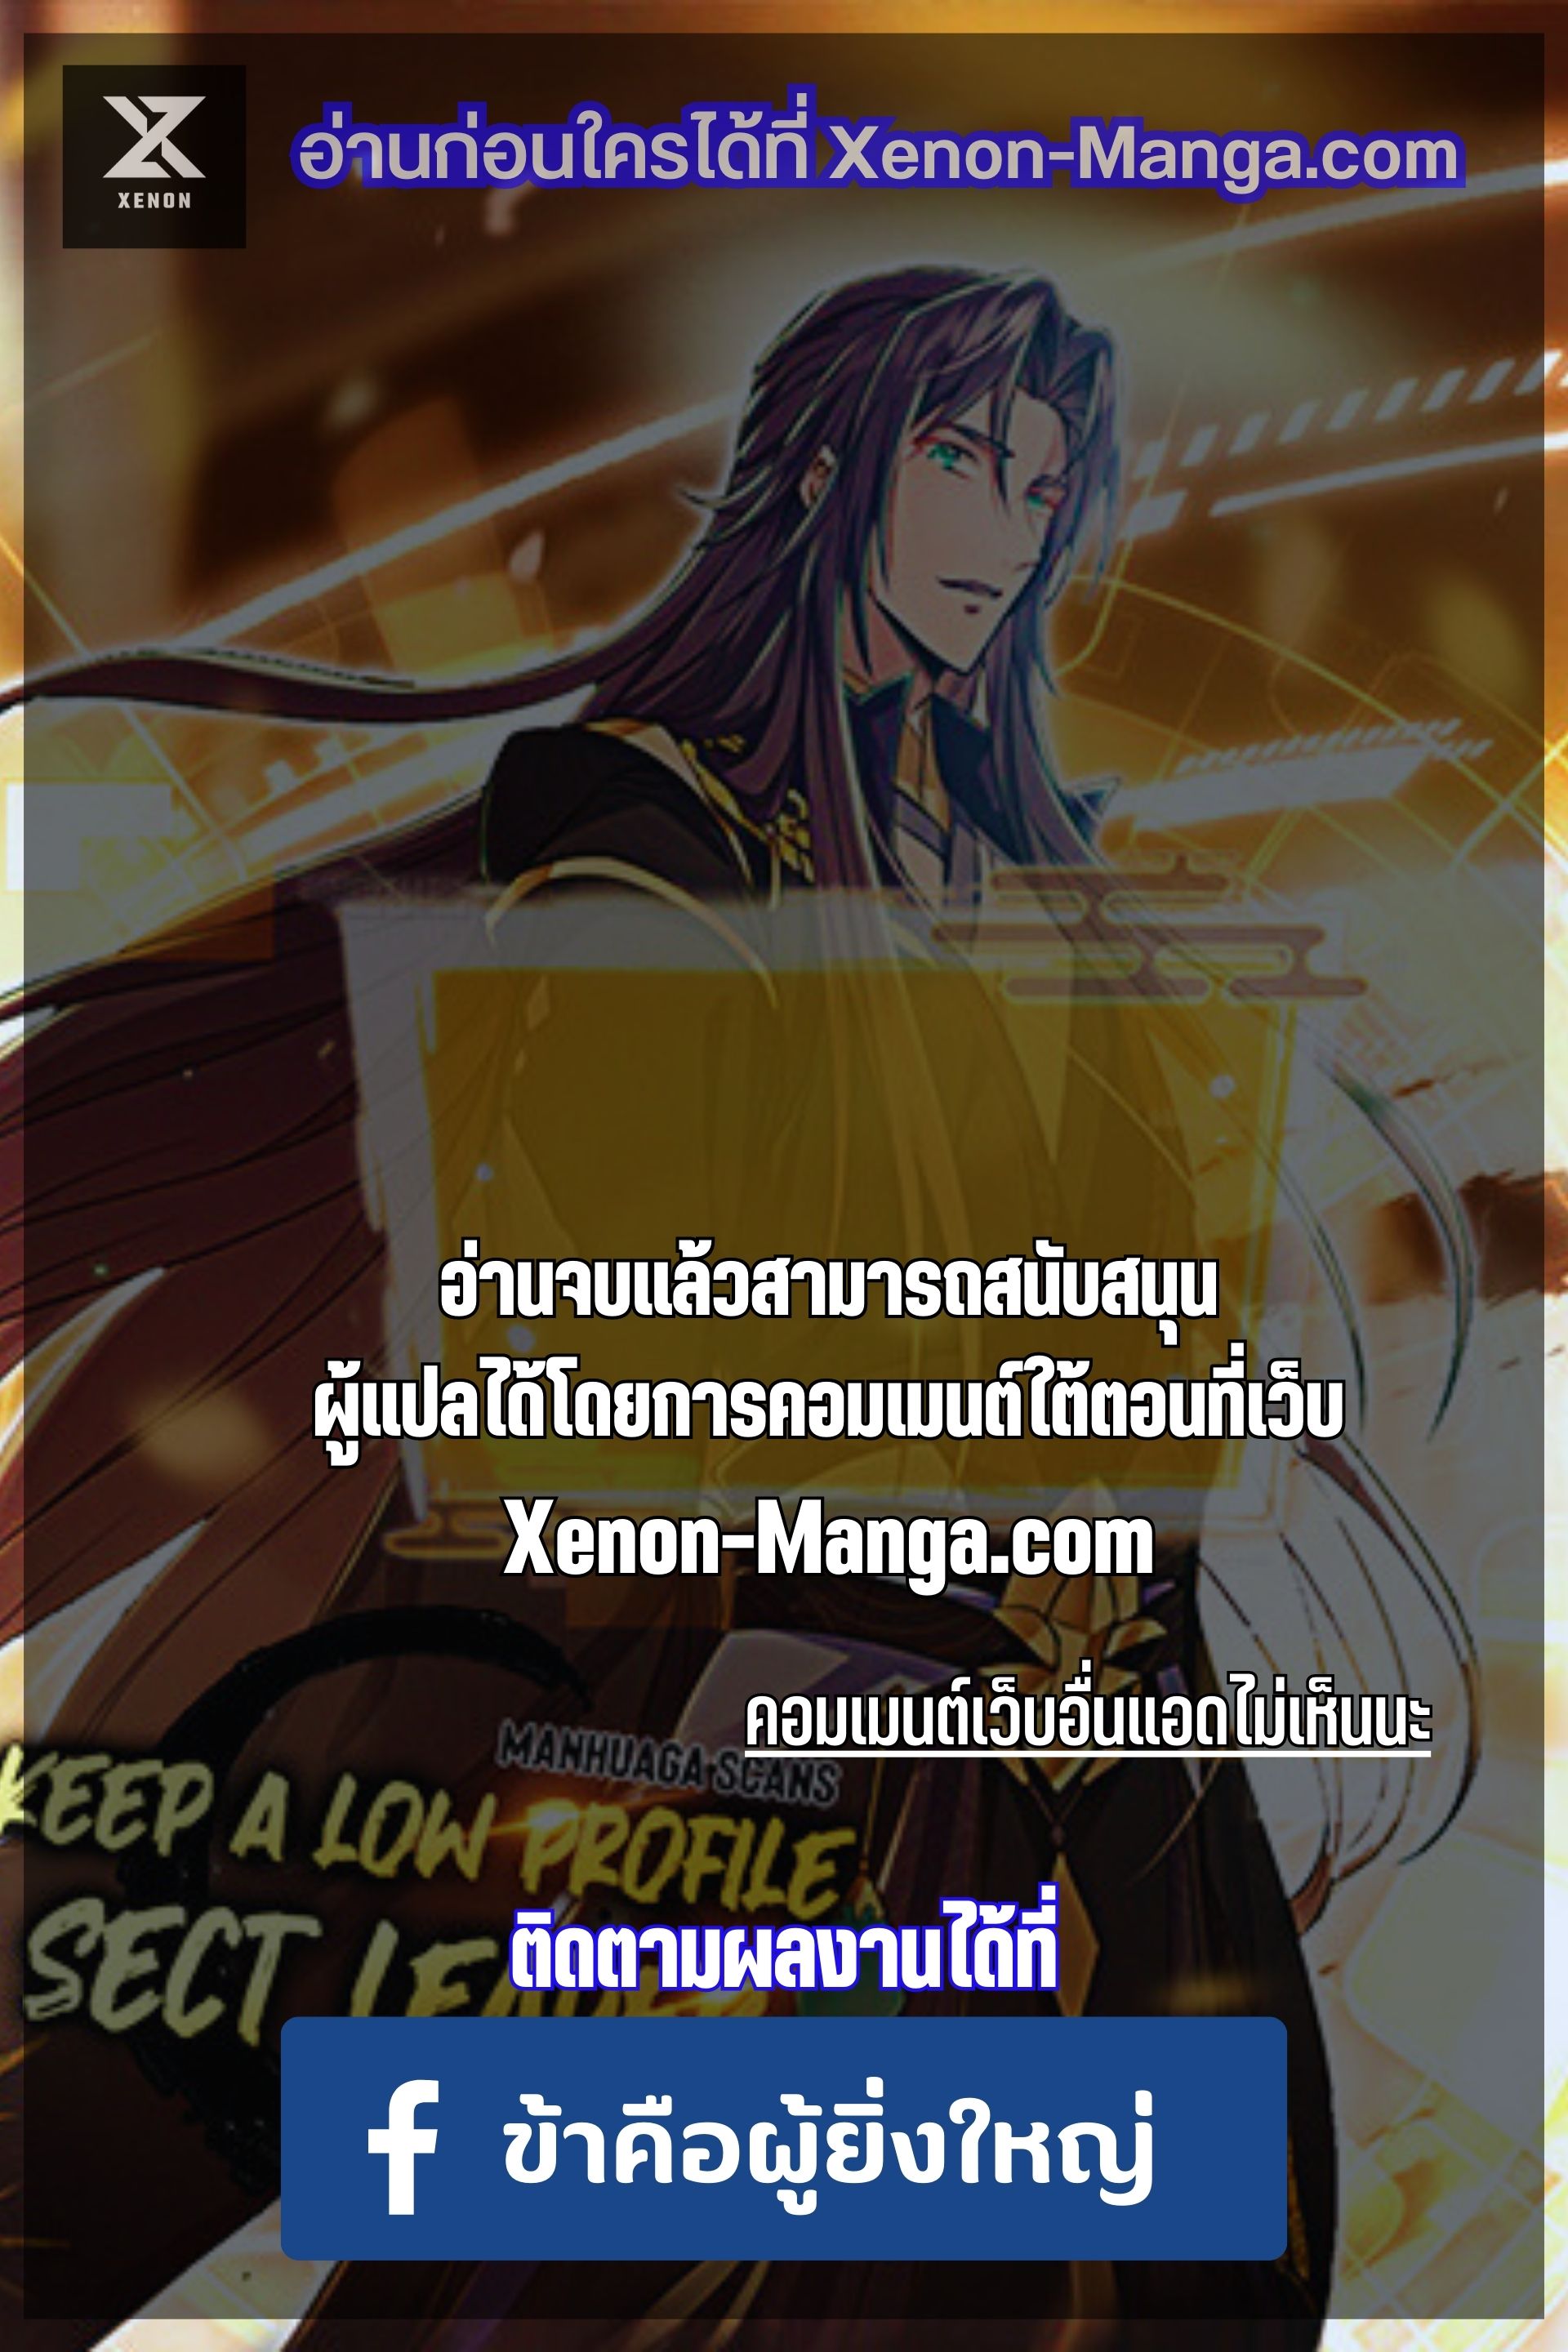 Xenon Manga.com